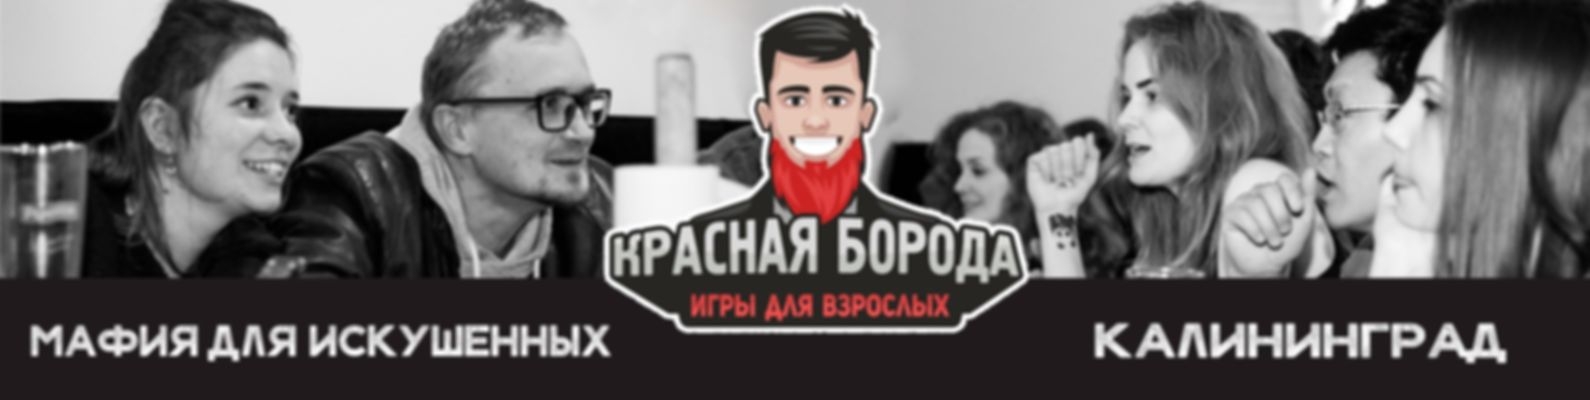 Мафия - клуб "Красная борода" Калининград - фото